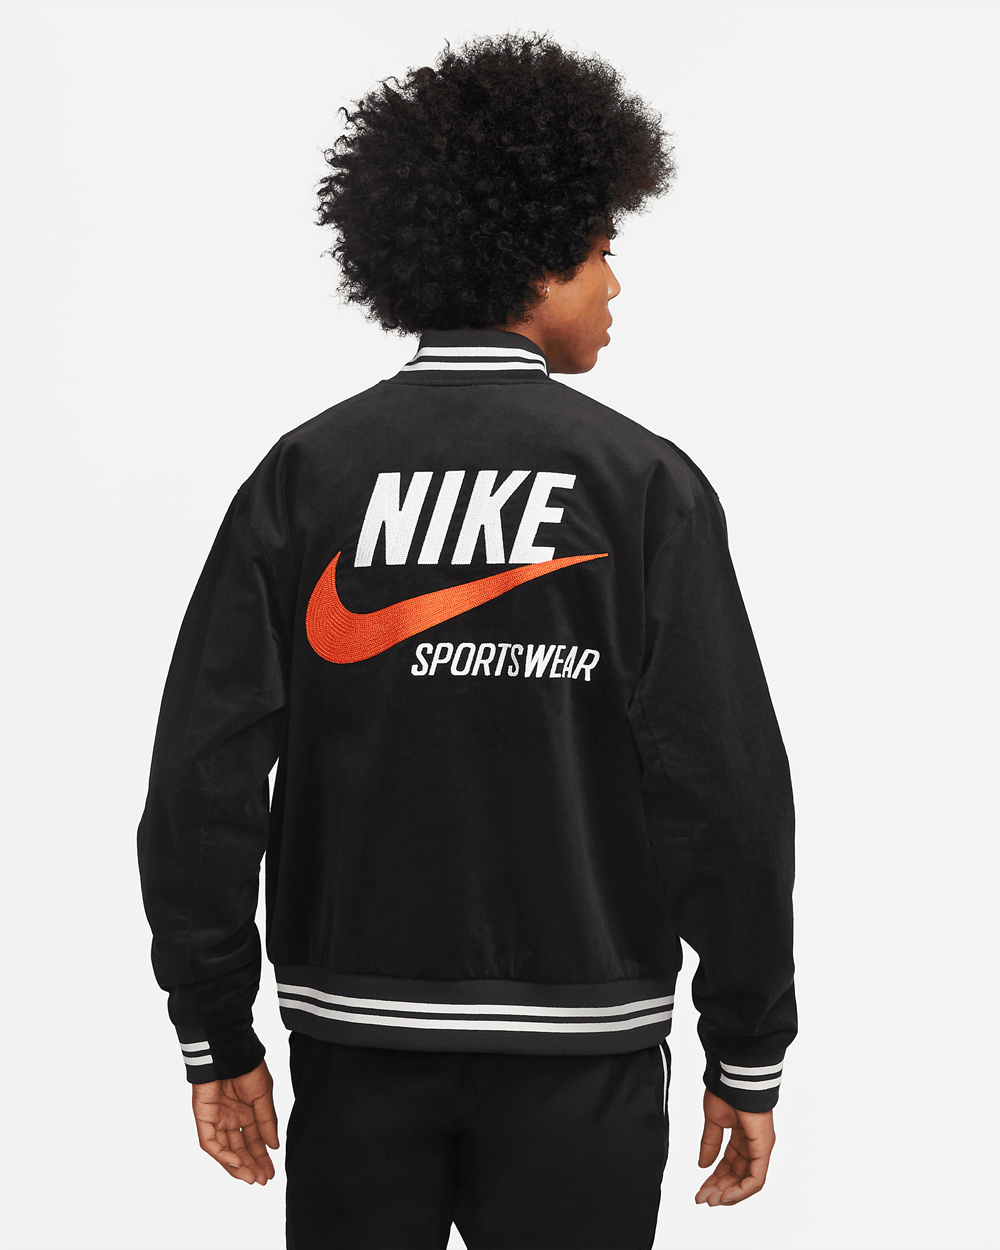 Nike-Sportswear-Trend-Bomber-Jacket-Black-White-Orange-2